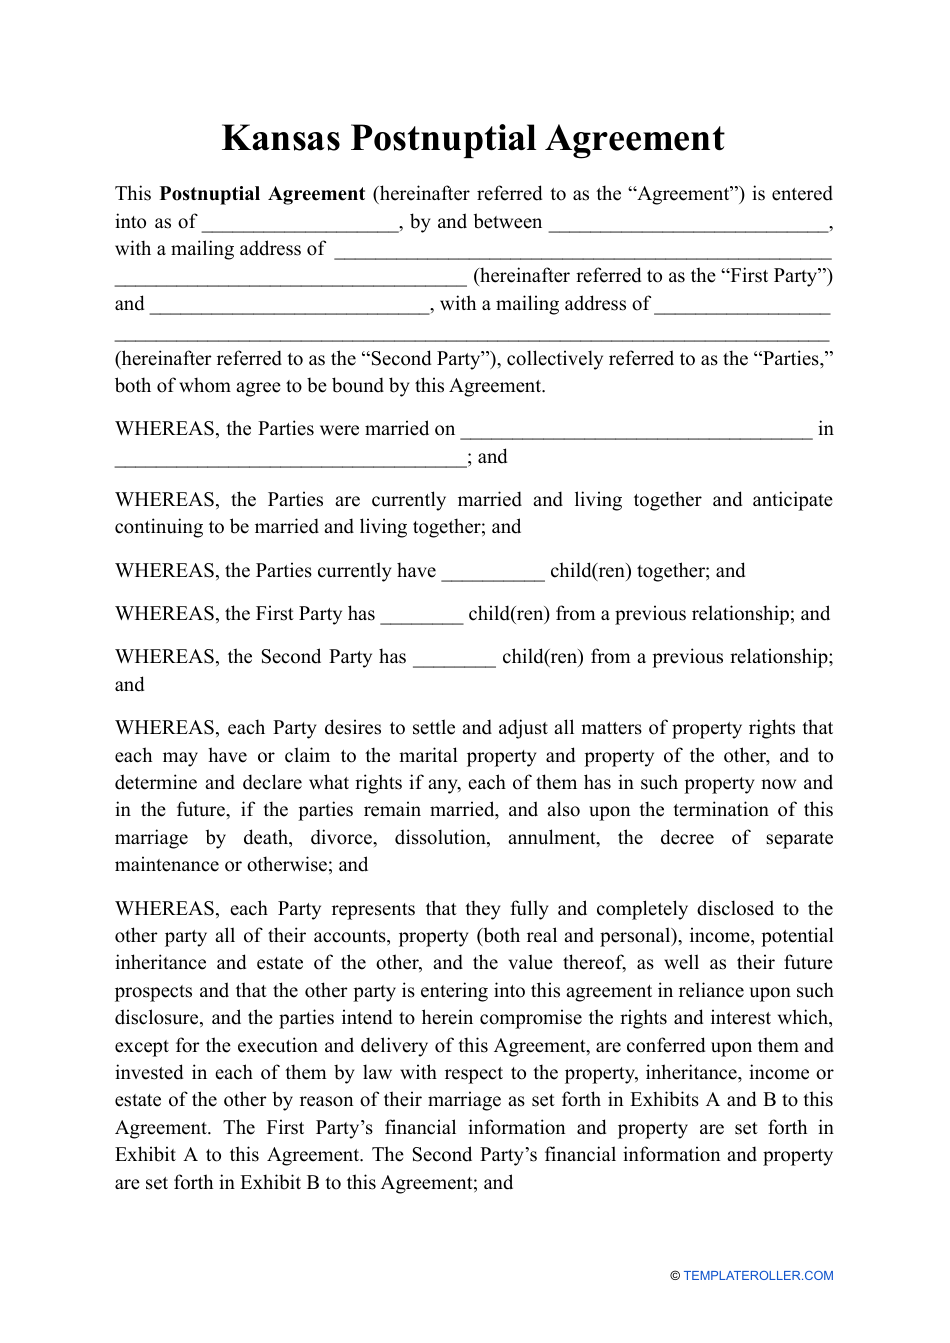 Postnuptial Agreement Template - Kansas, Page 1